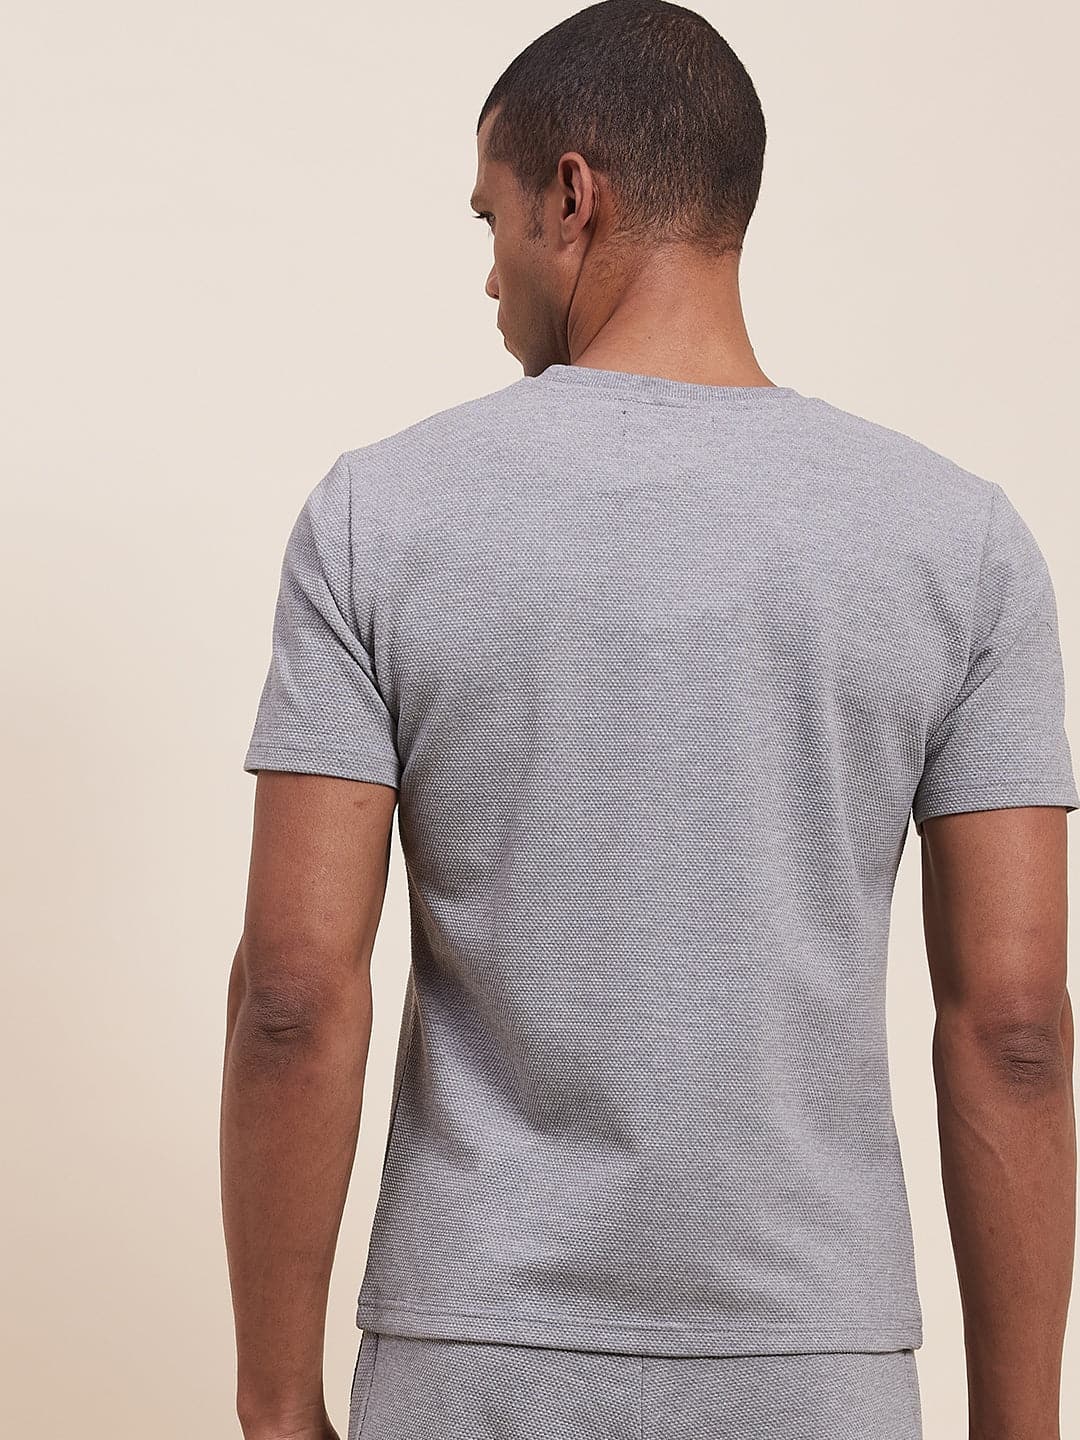 Men's Grey Melange Slim Fit Pocket T-Shirt - LYUSH-MASCLN